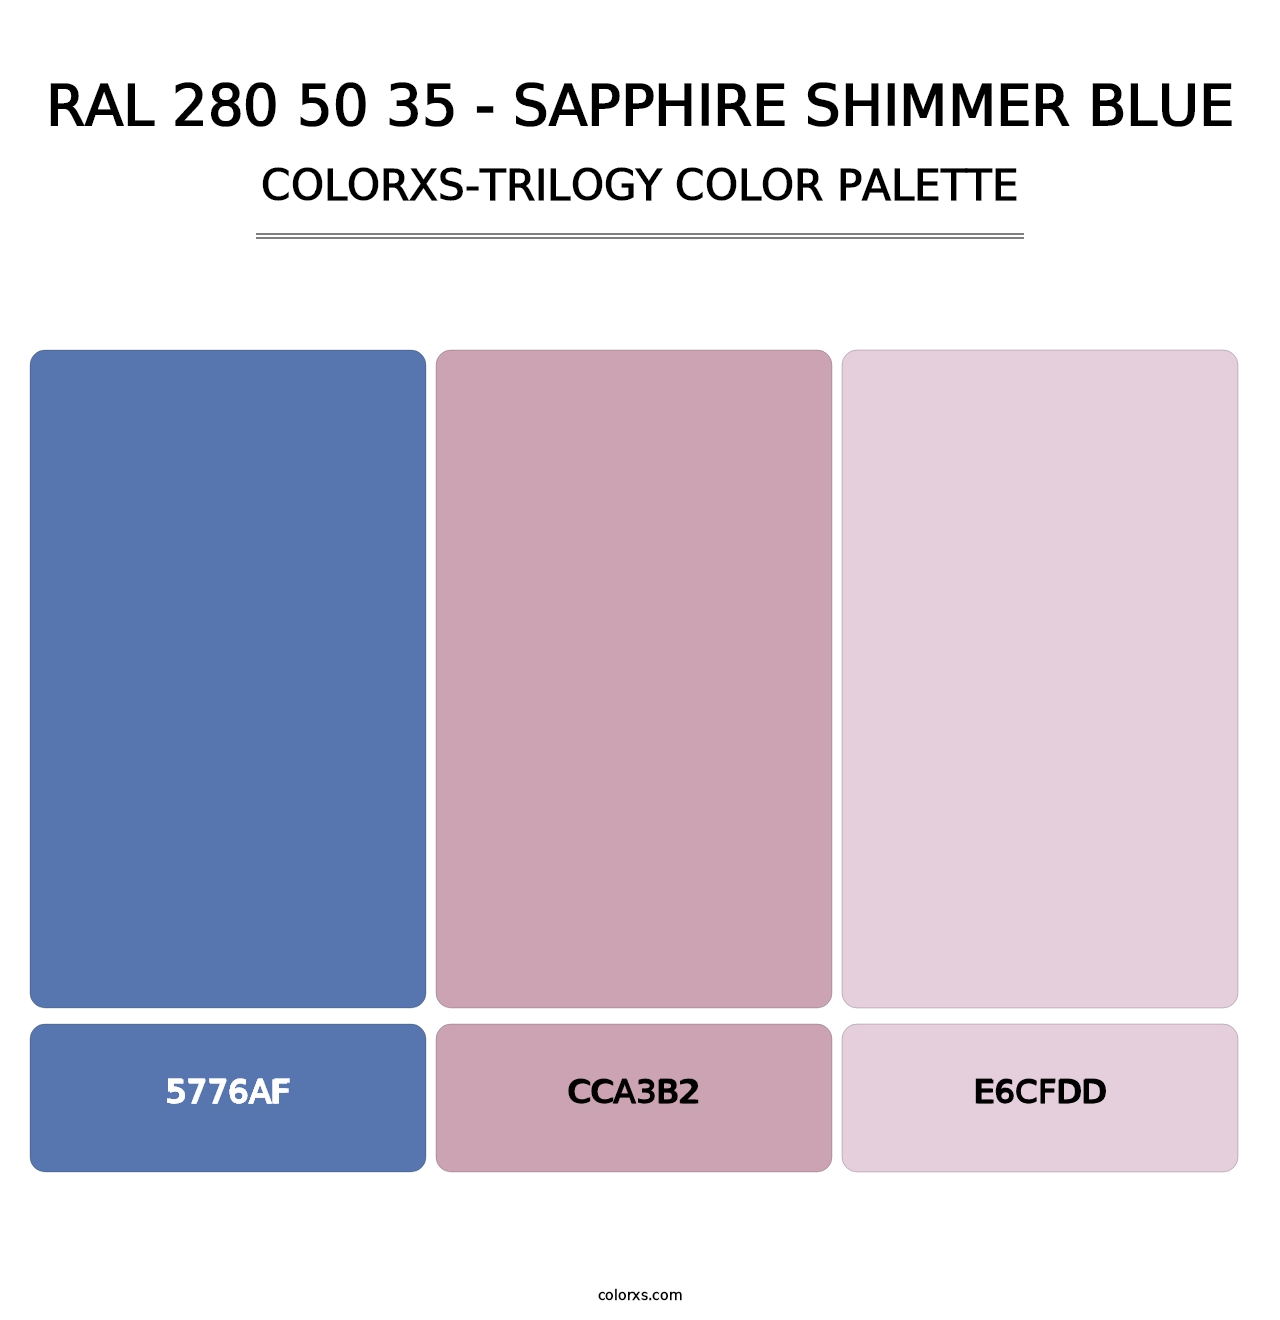 RAL 280 50 35 - Sapphire Shimmer Blue - Colorxs Trilogy Palette